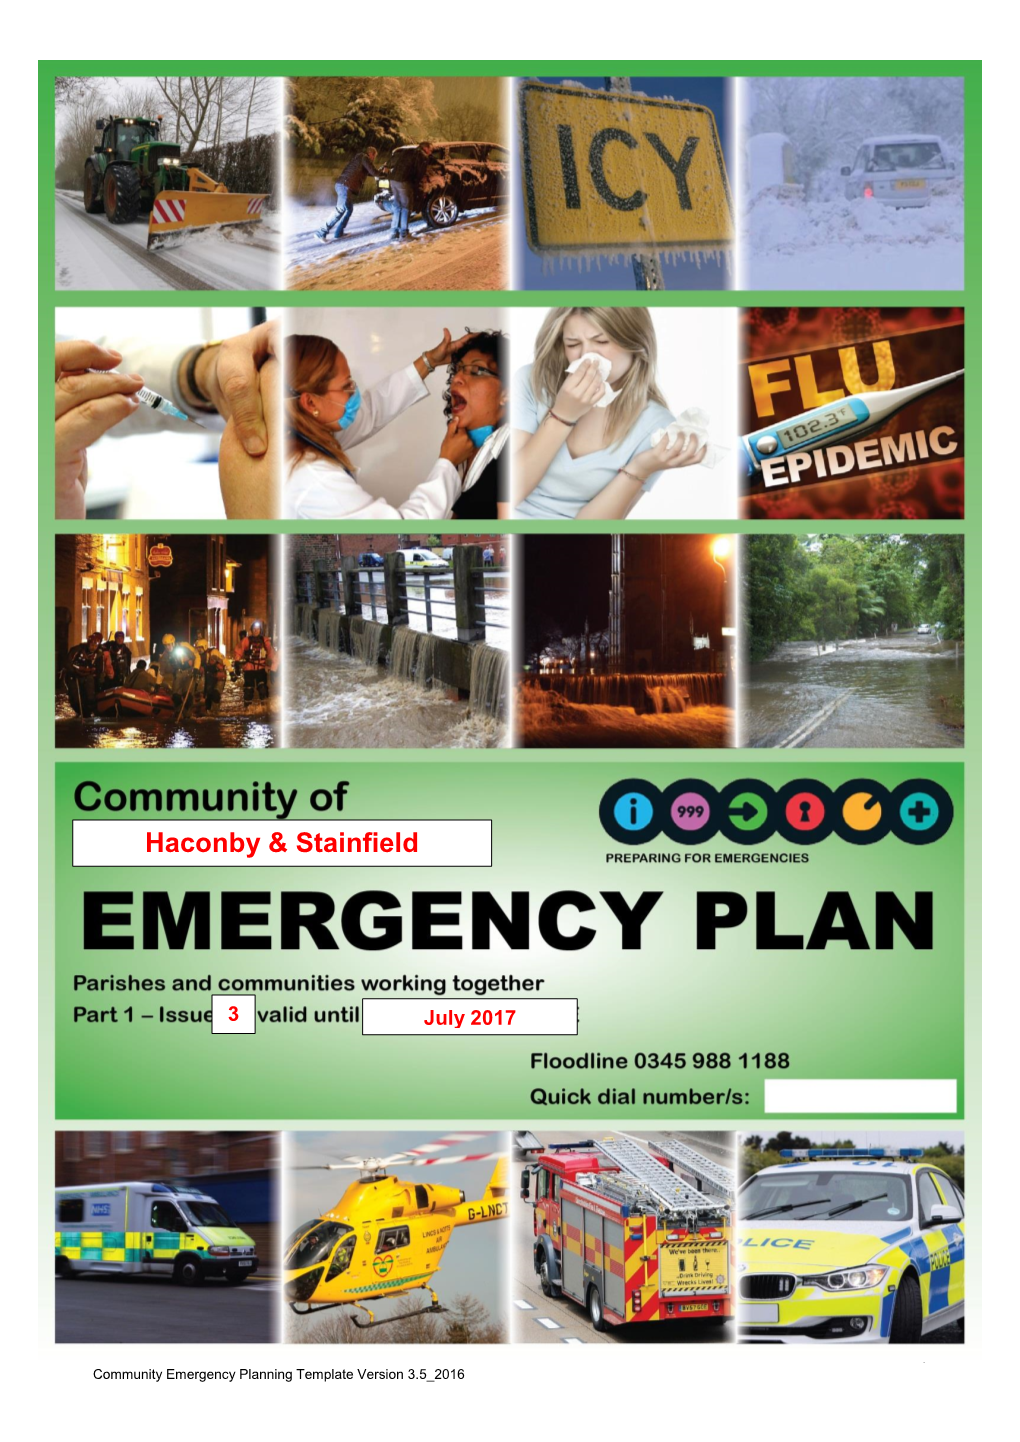 Community Emergency Planning Template Version 3.5 2016